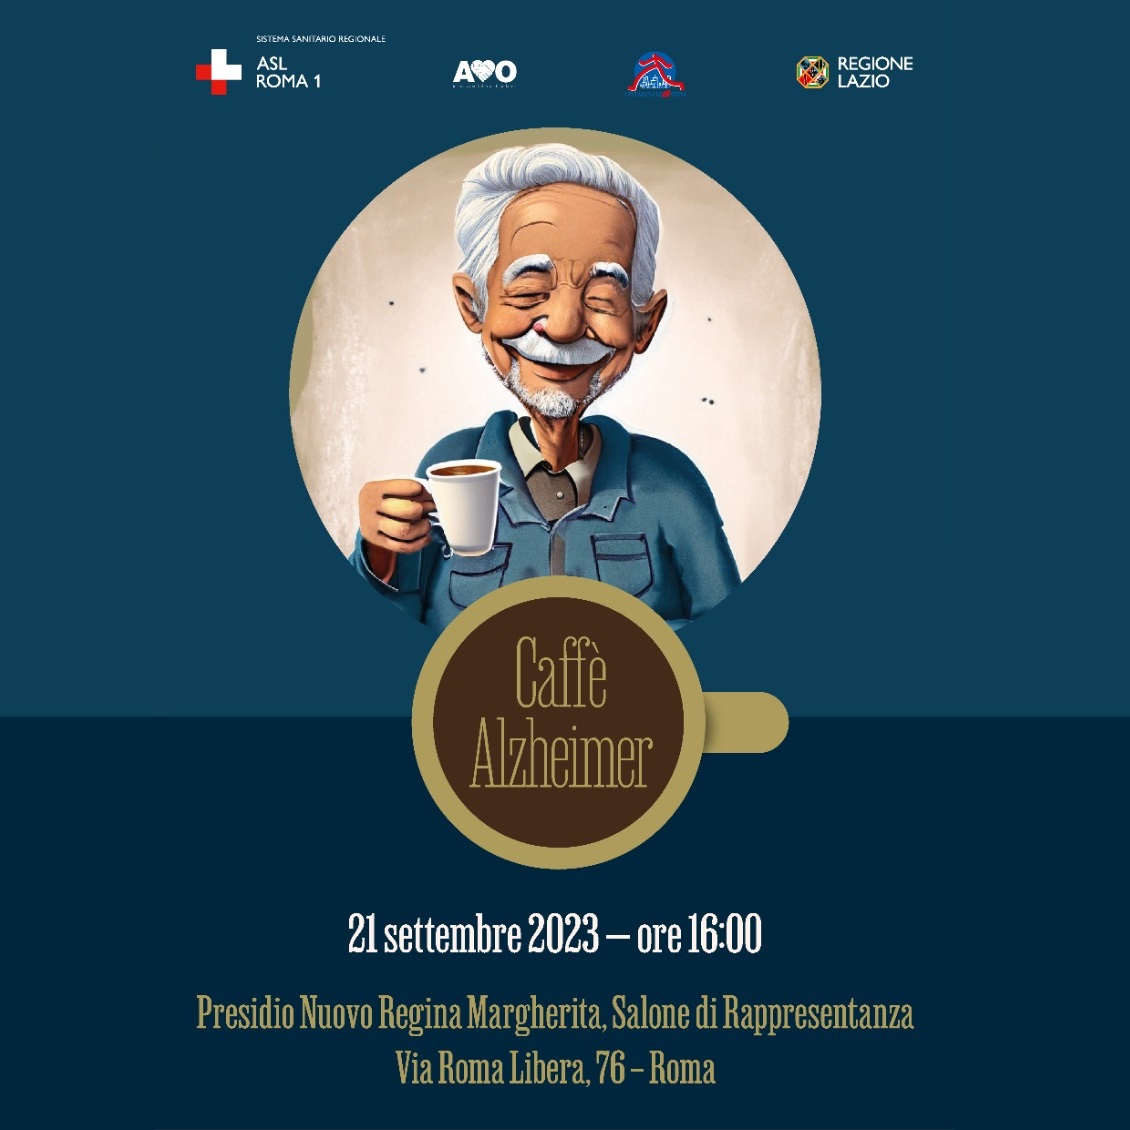 21 settembre Presentazione di "Caffè Alzheimer" al Nuovo Regina Margherita